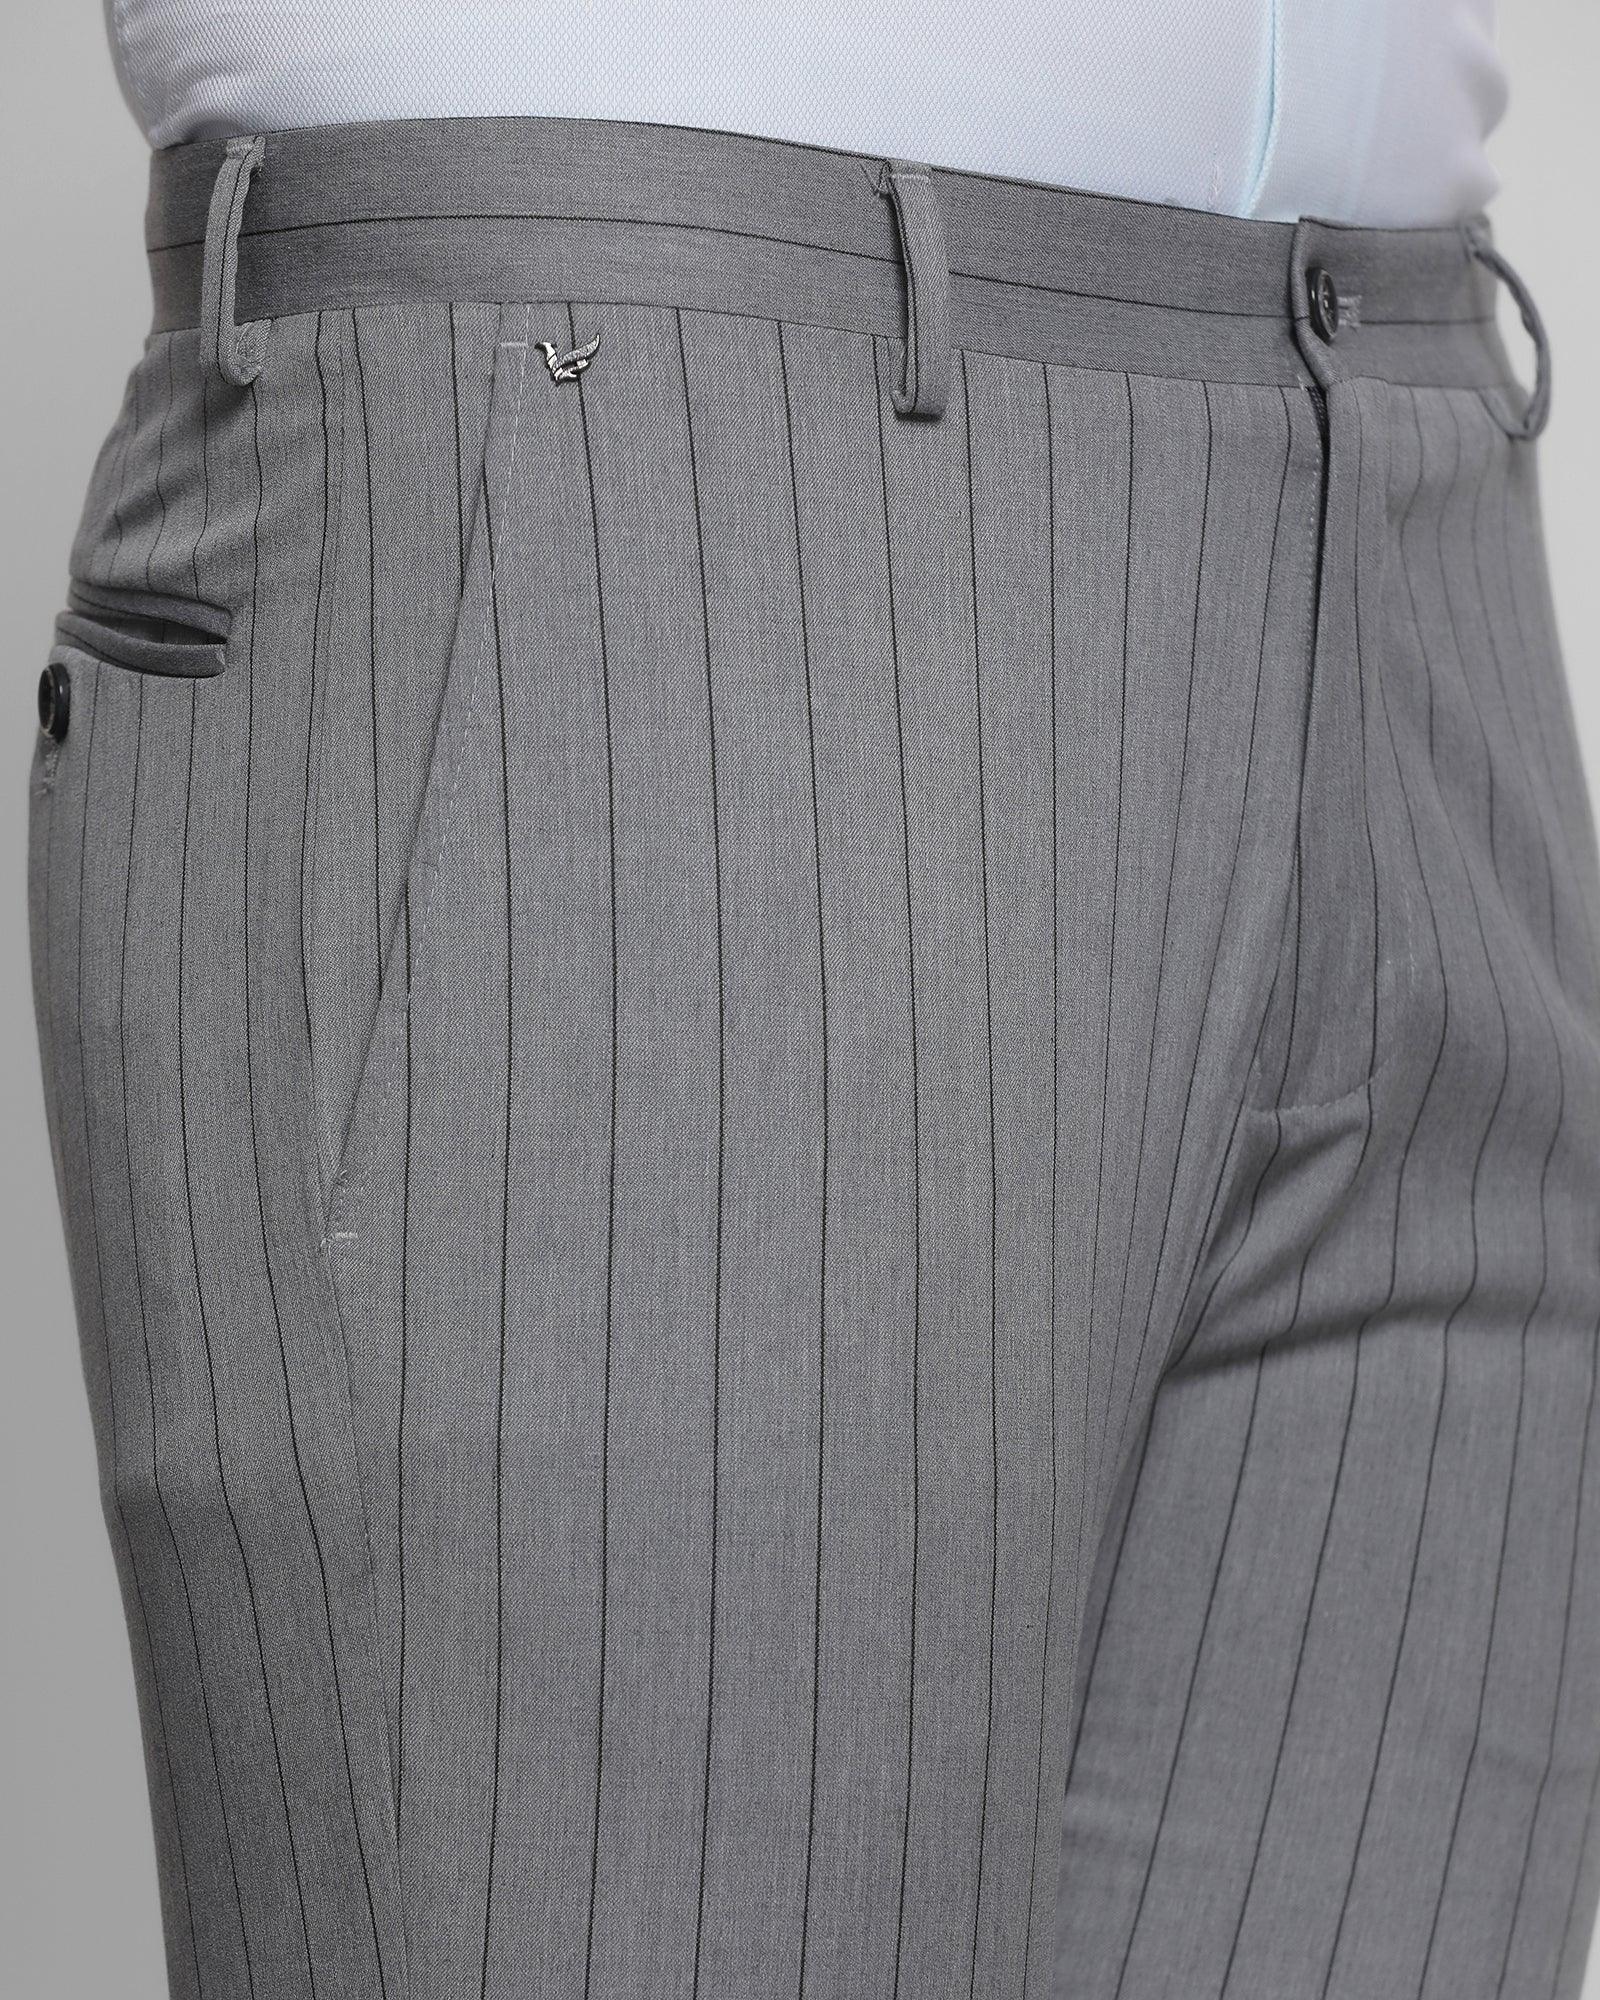 Super Slim Phoenix Formal Grey Striped Trouser - Rim